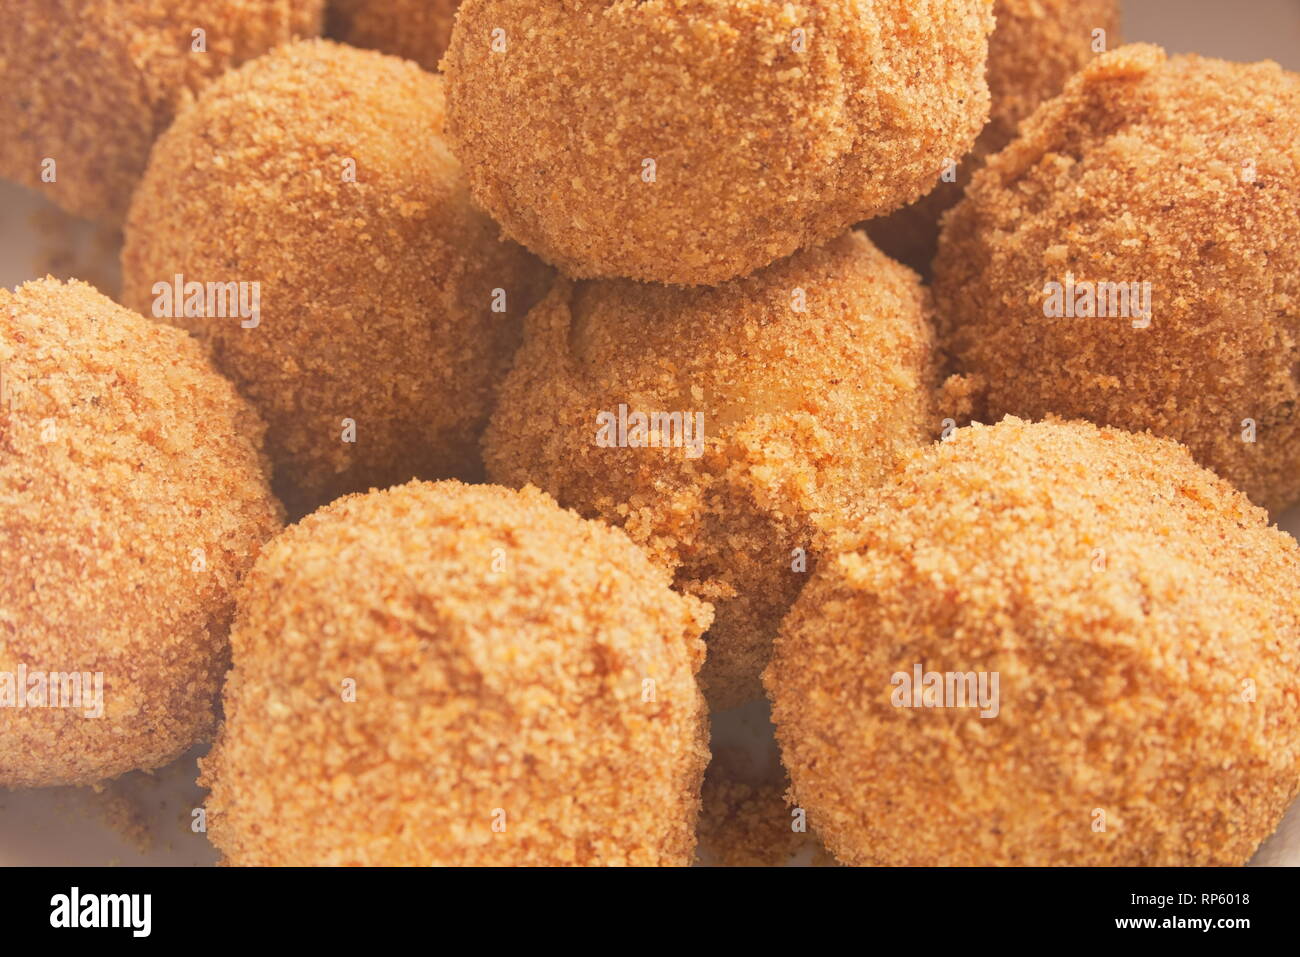 Plum Dumplings Covered in Bread Crumbs Closeup Stock Photo